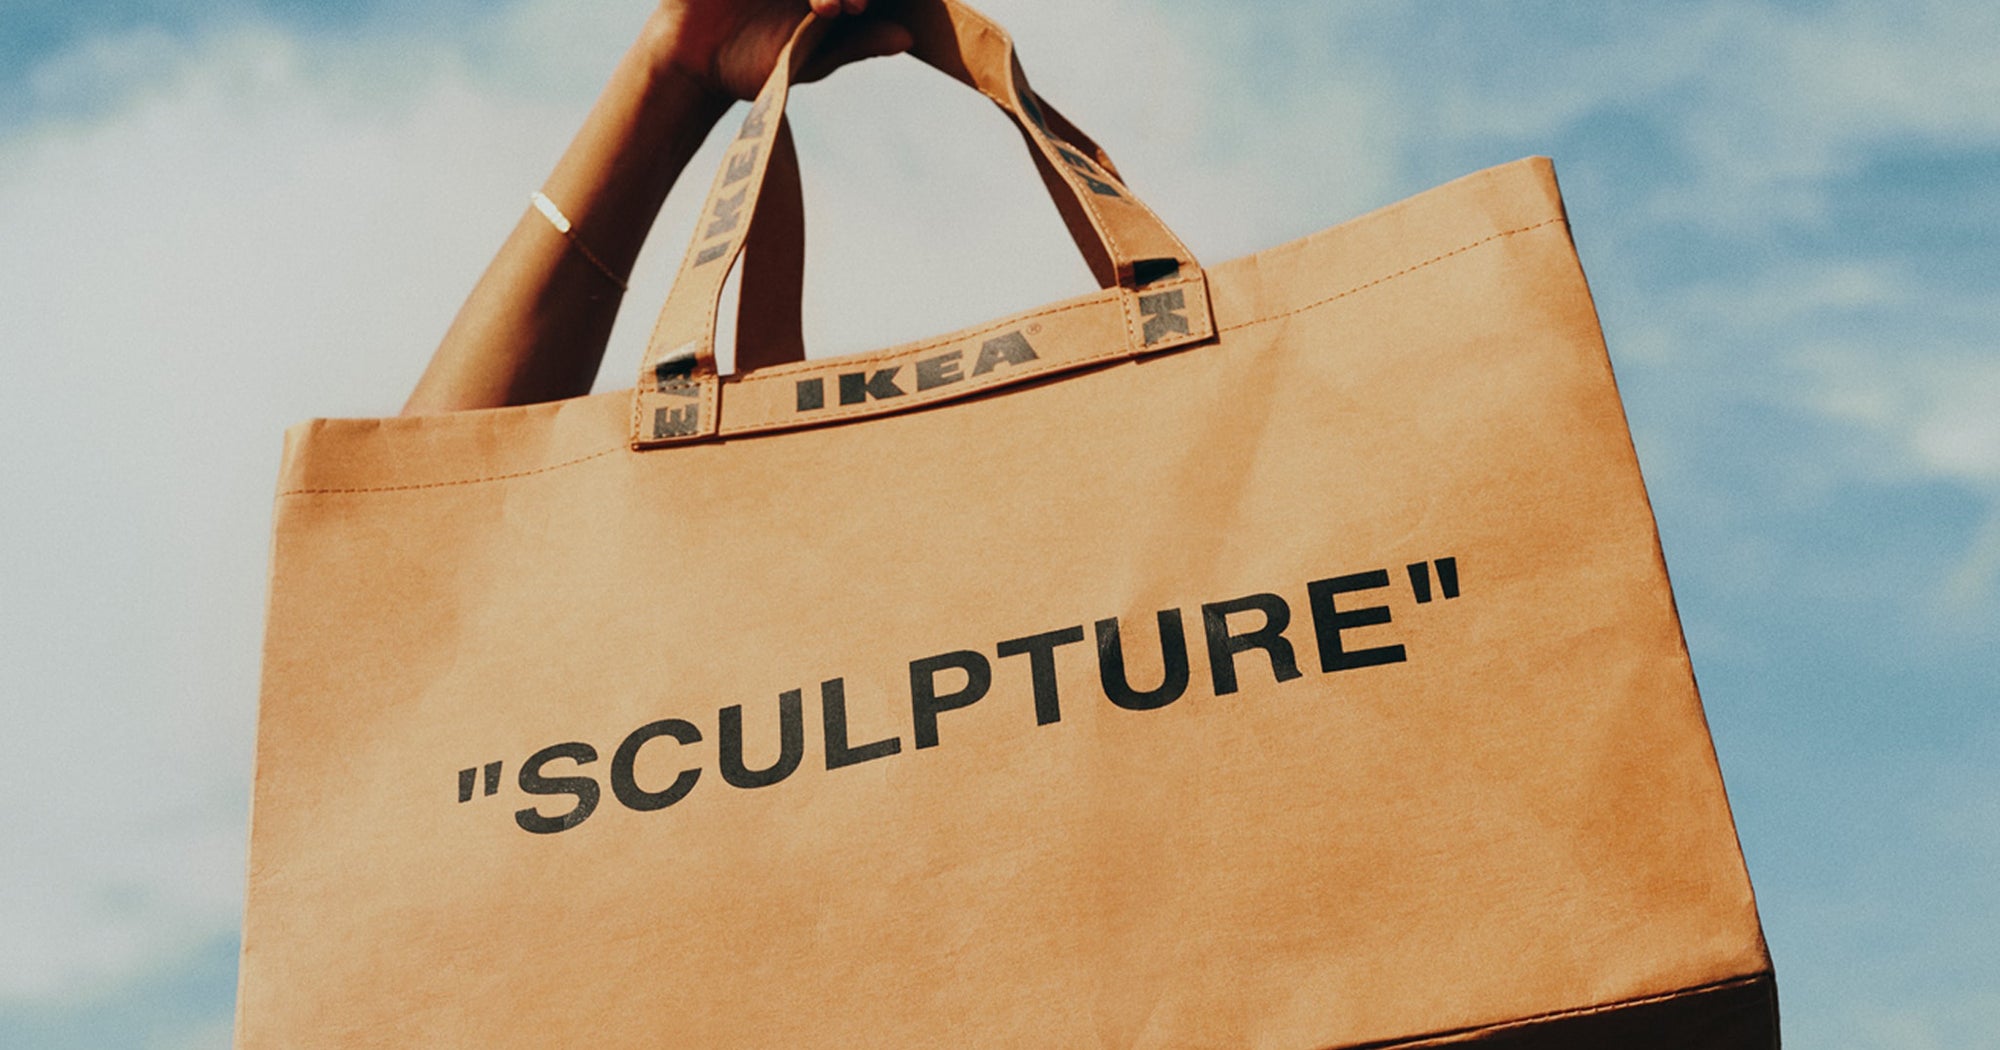 Luxury (not really) Bag Haul- Virgil Abloh x Ikea paper bag 